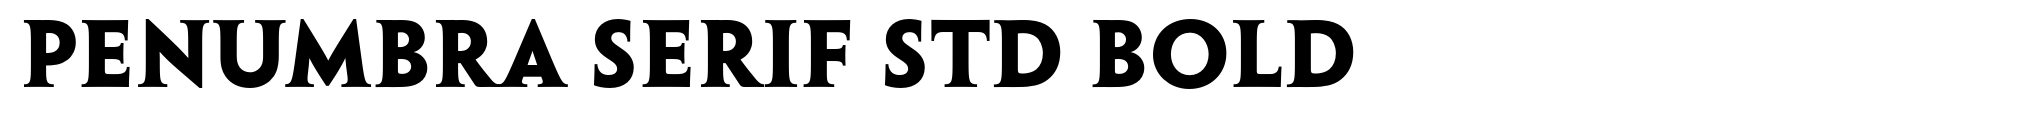 Penumbra Serif Std Bold image